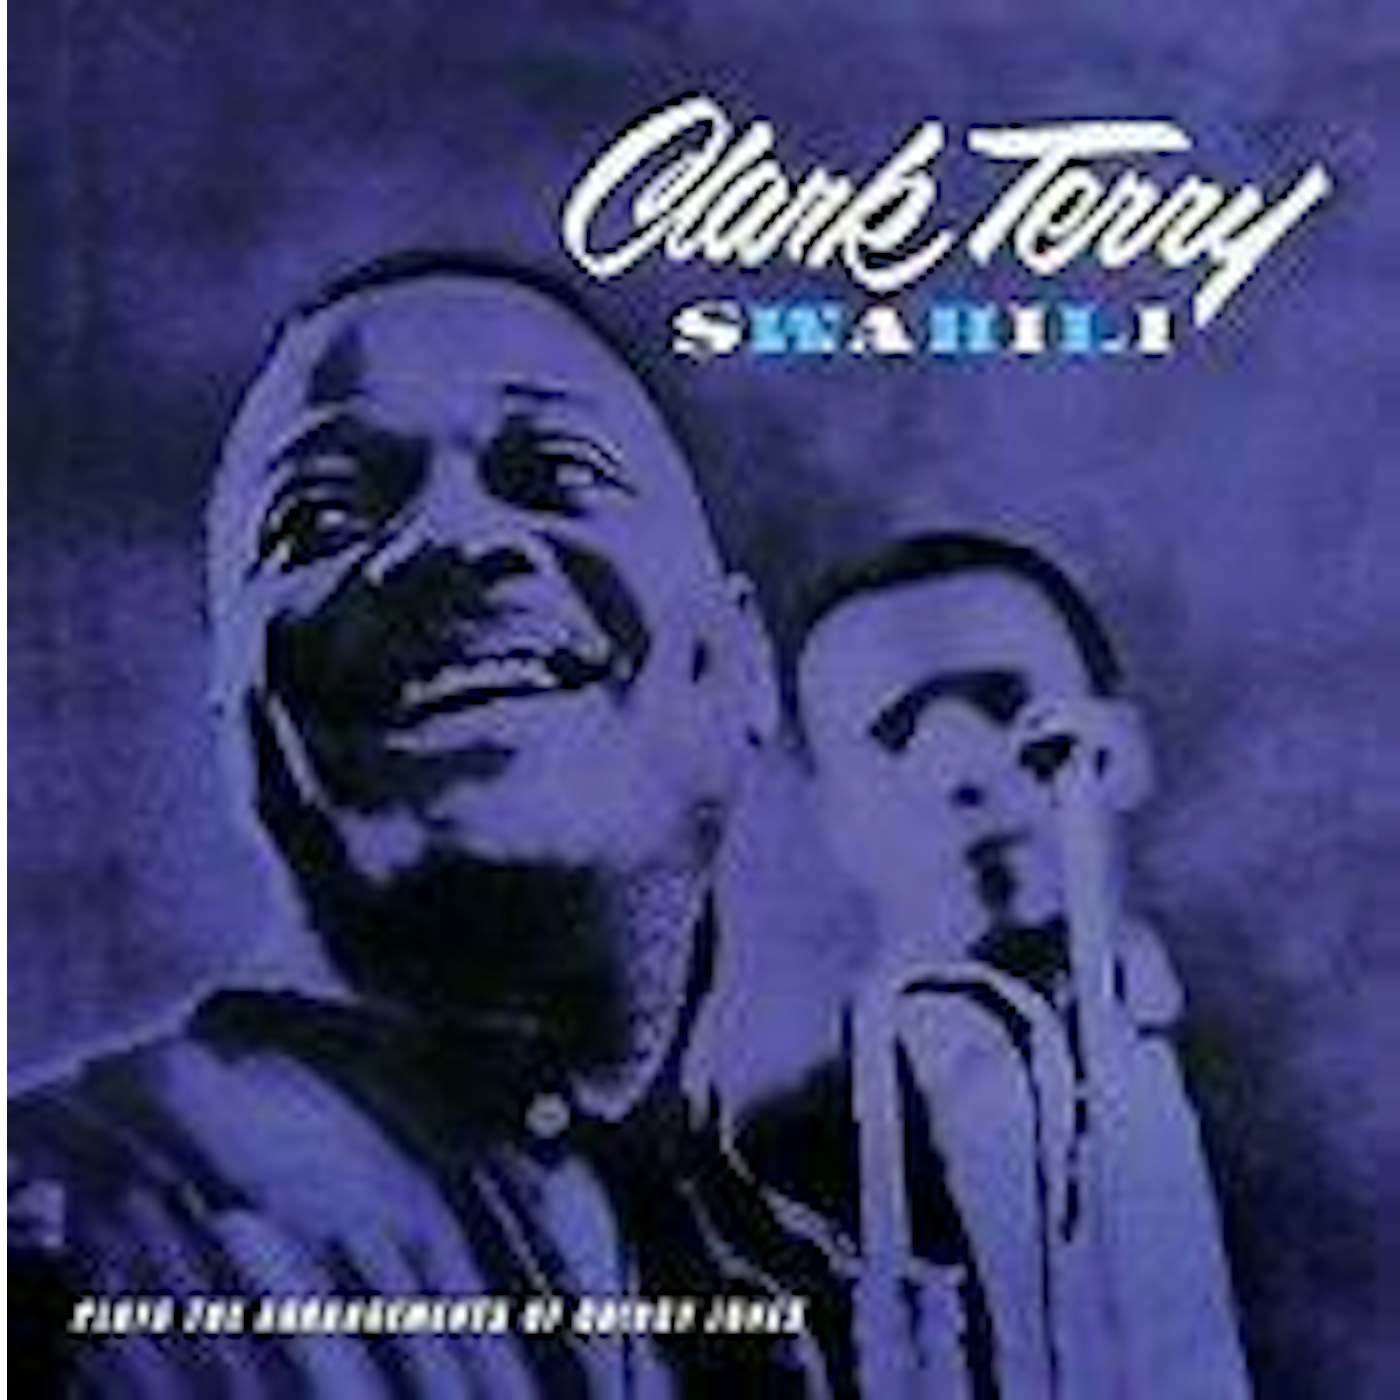 Clark Terry SWAHILI CD